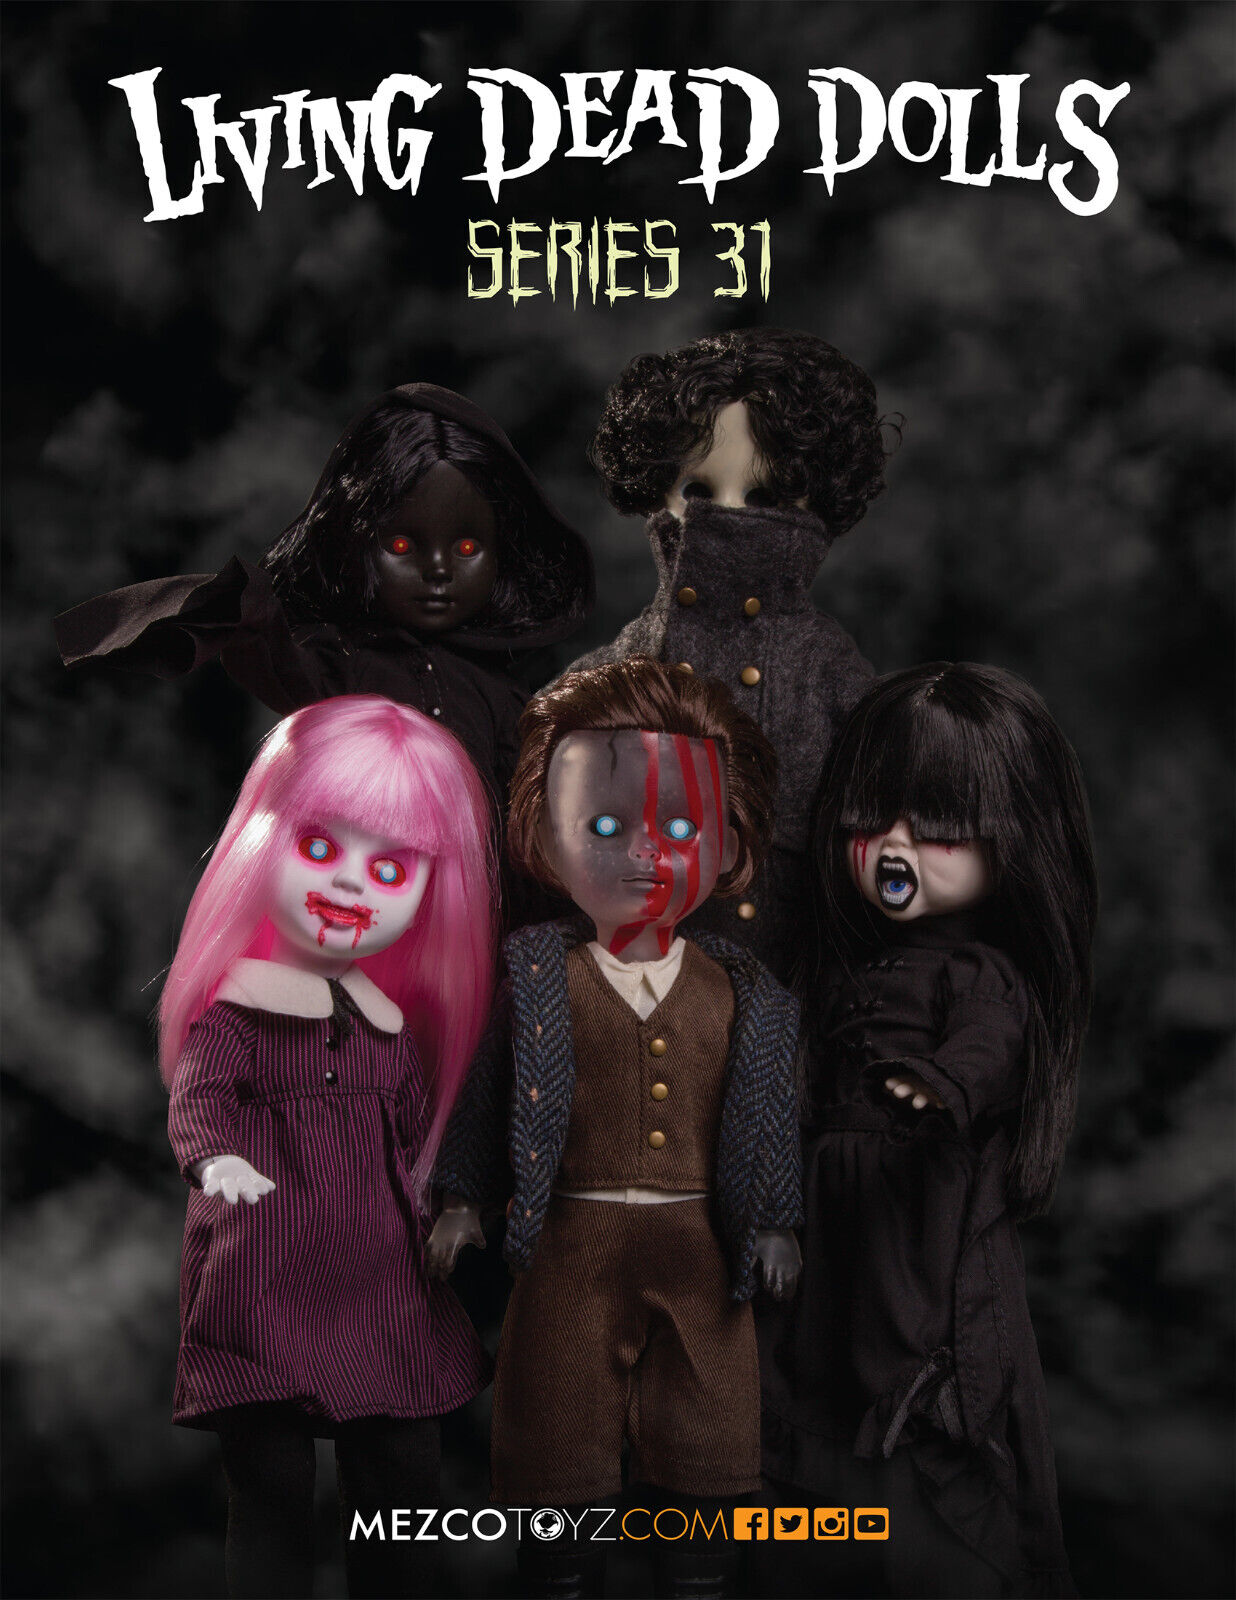 Living Dead Dolls series 31 set